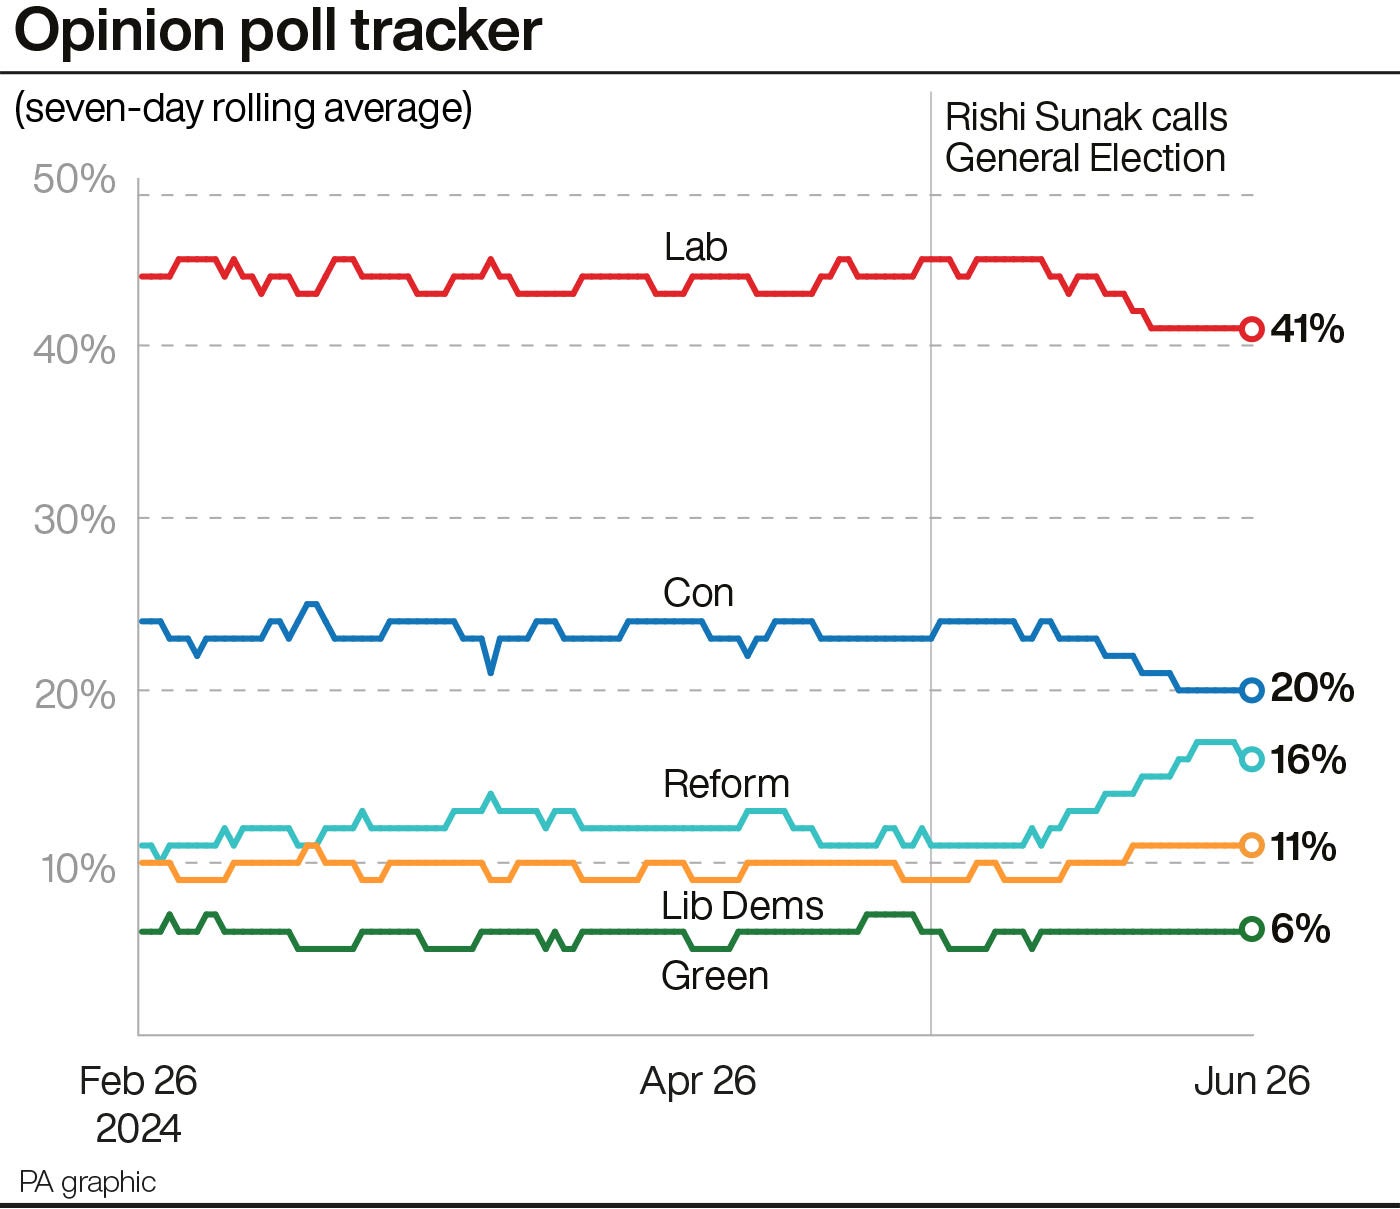 A UK politics opinion poll tracker